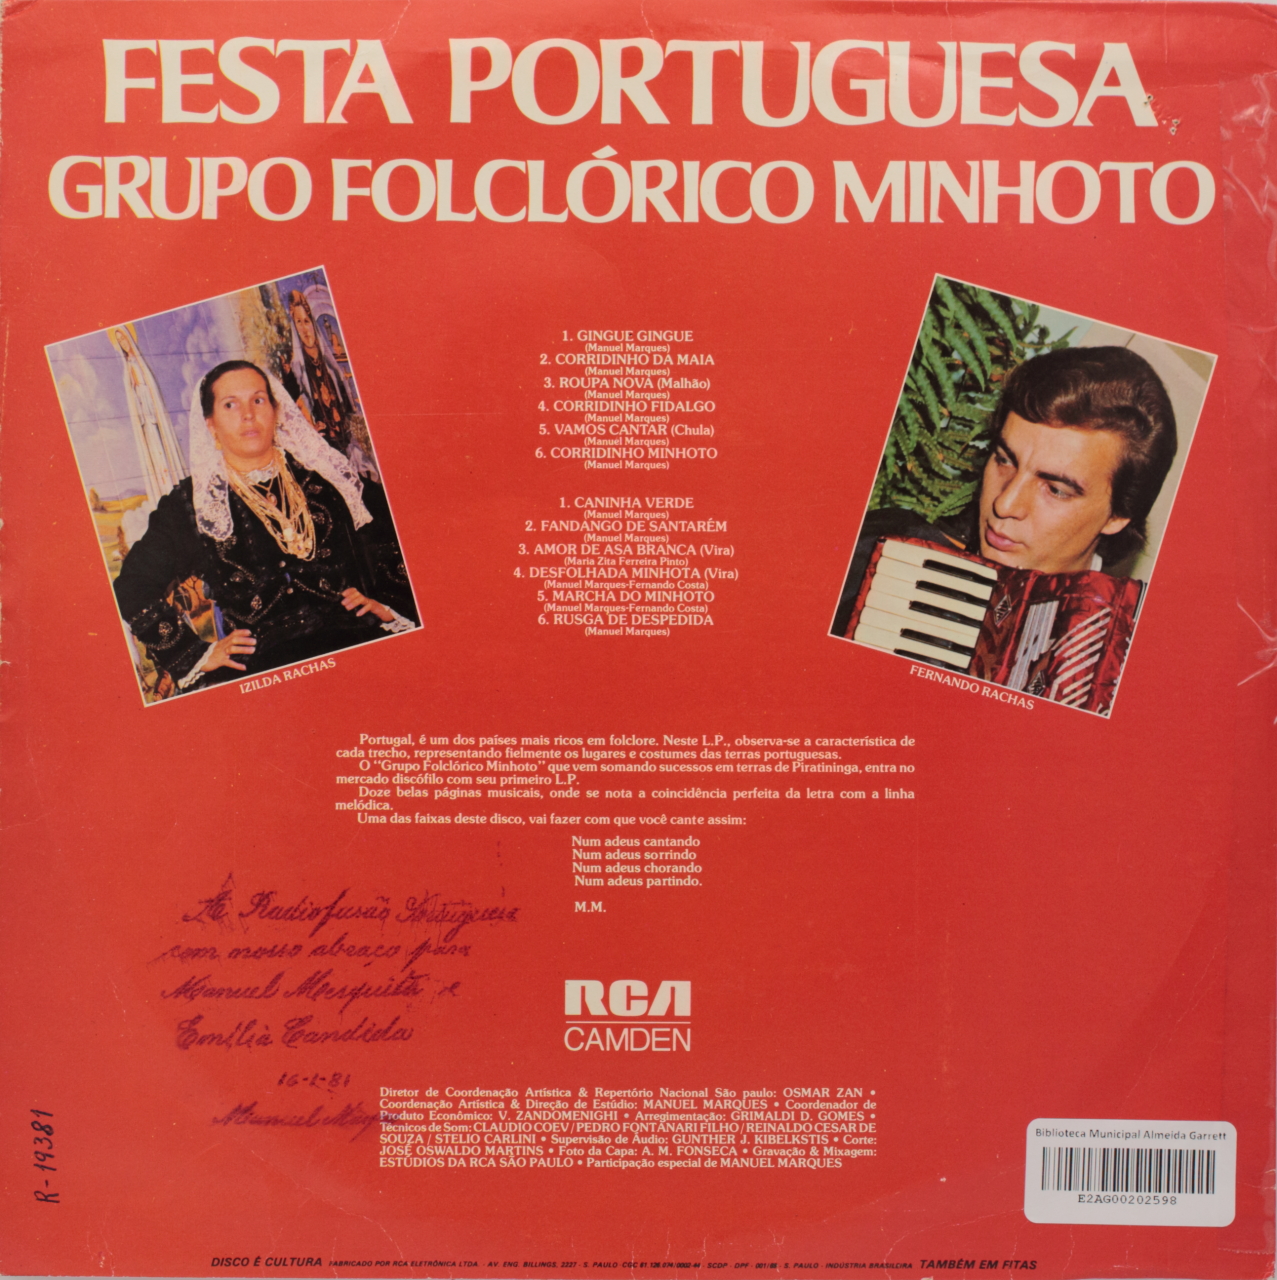 Festa portuguesa